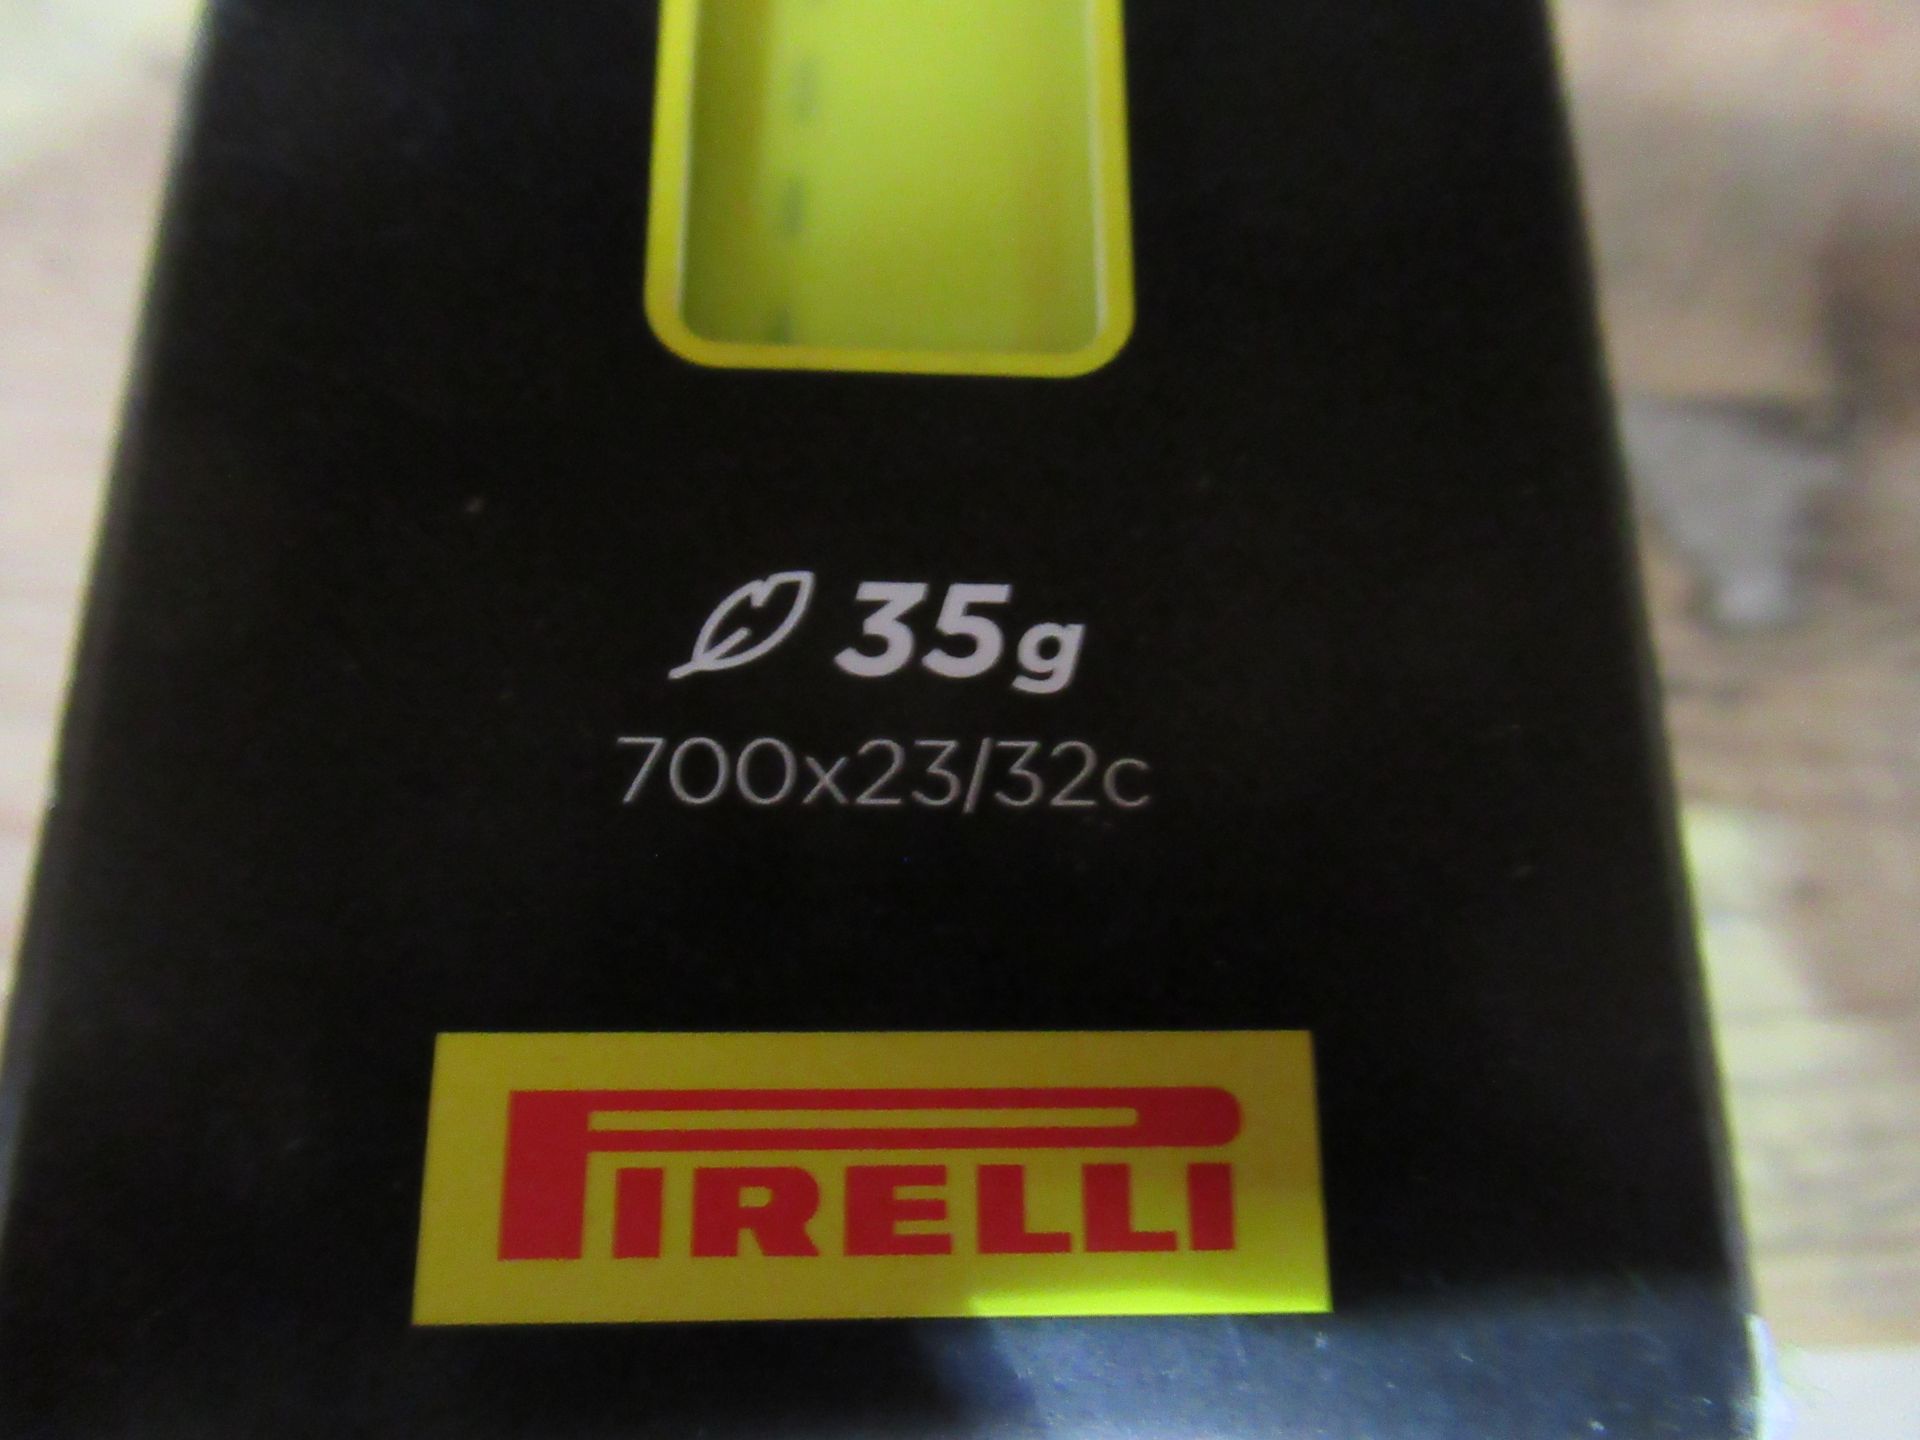 7 x Pirelli P Zero 700x23/32c inner tubes (RRP£29.99 each) - Image 3 of 8